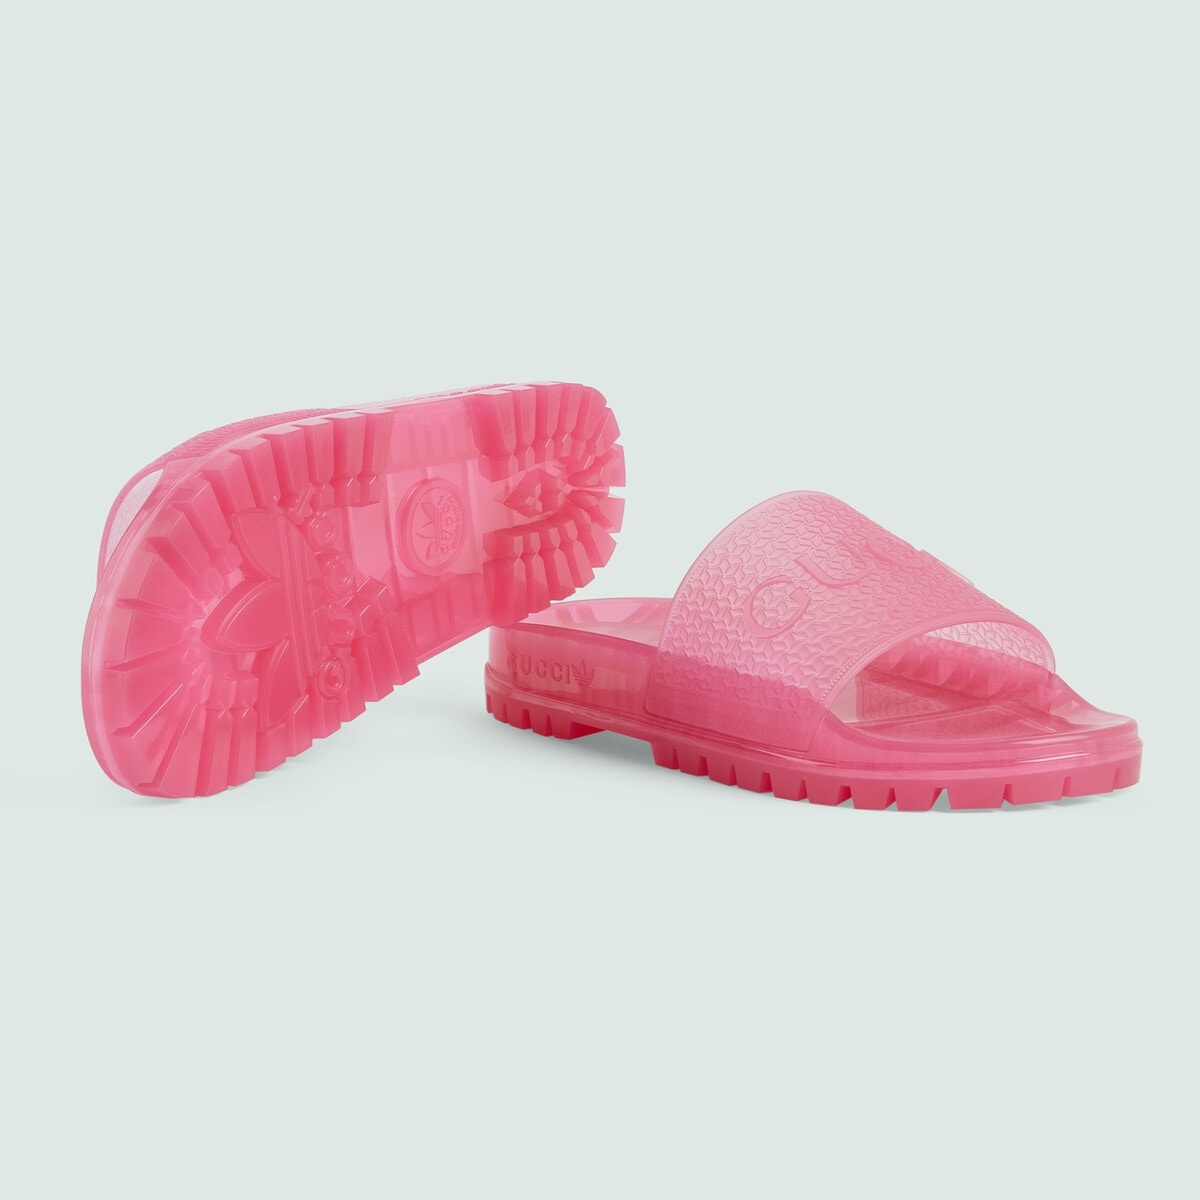 adidas x Gucci women's rubber slide sandal - 7